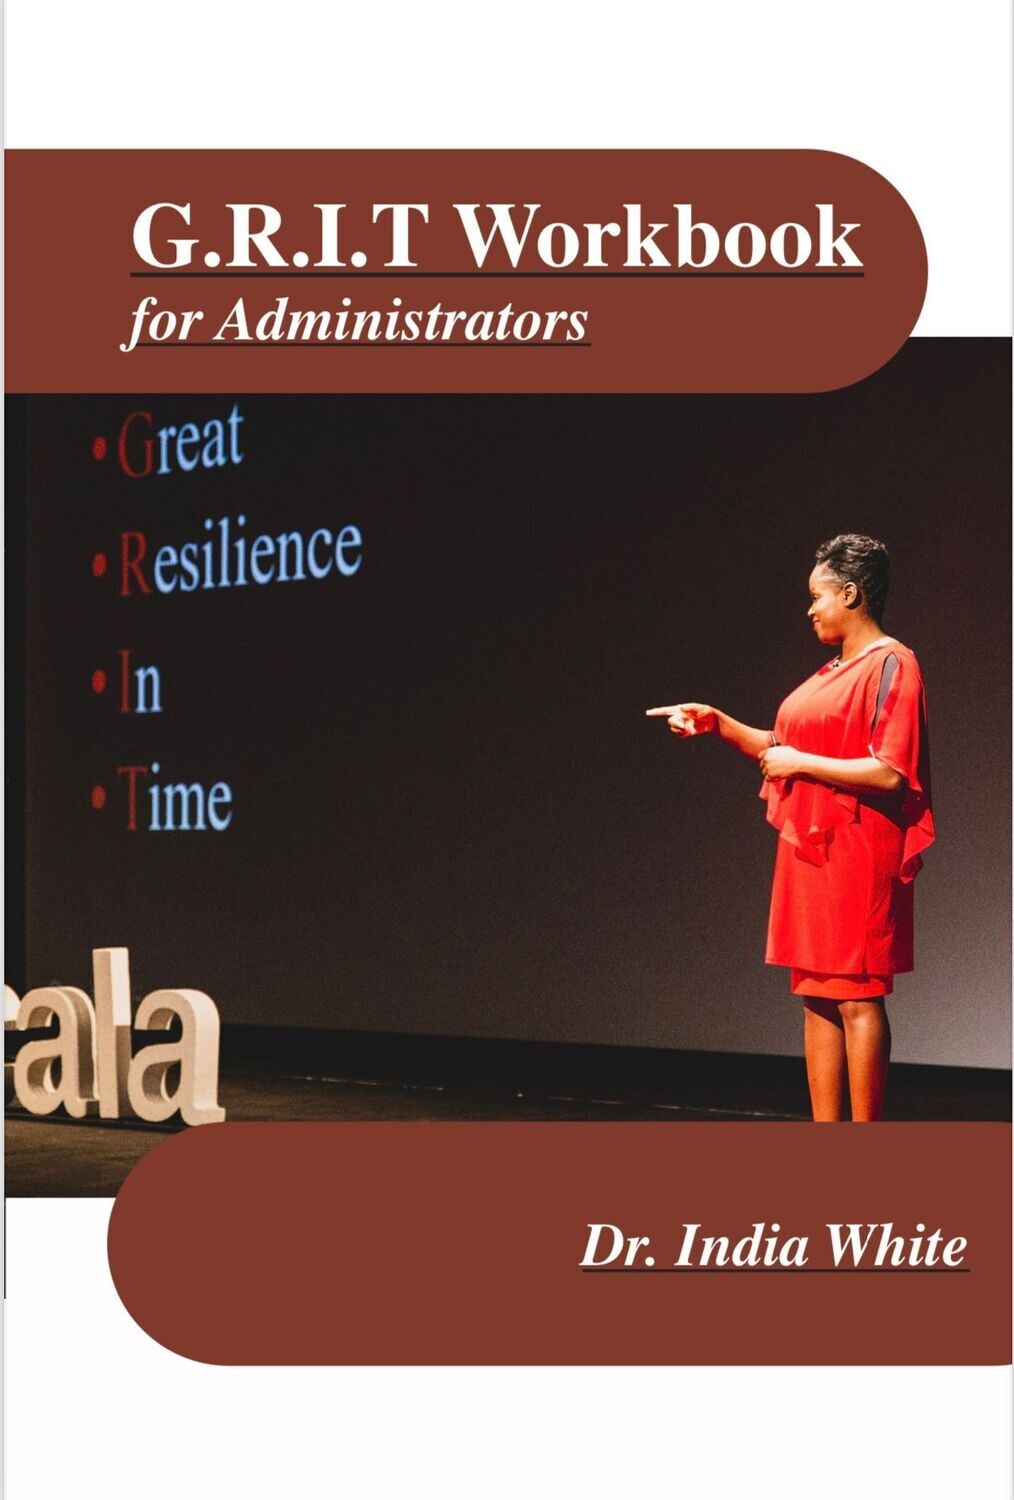 G.R.I.T. Workbook for Administrators!